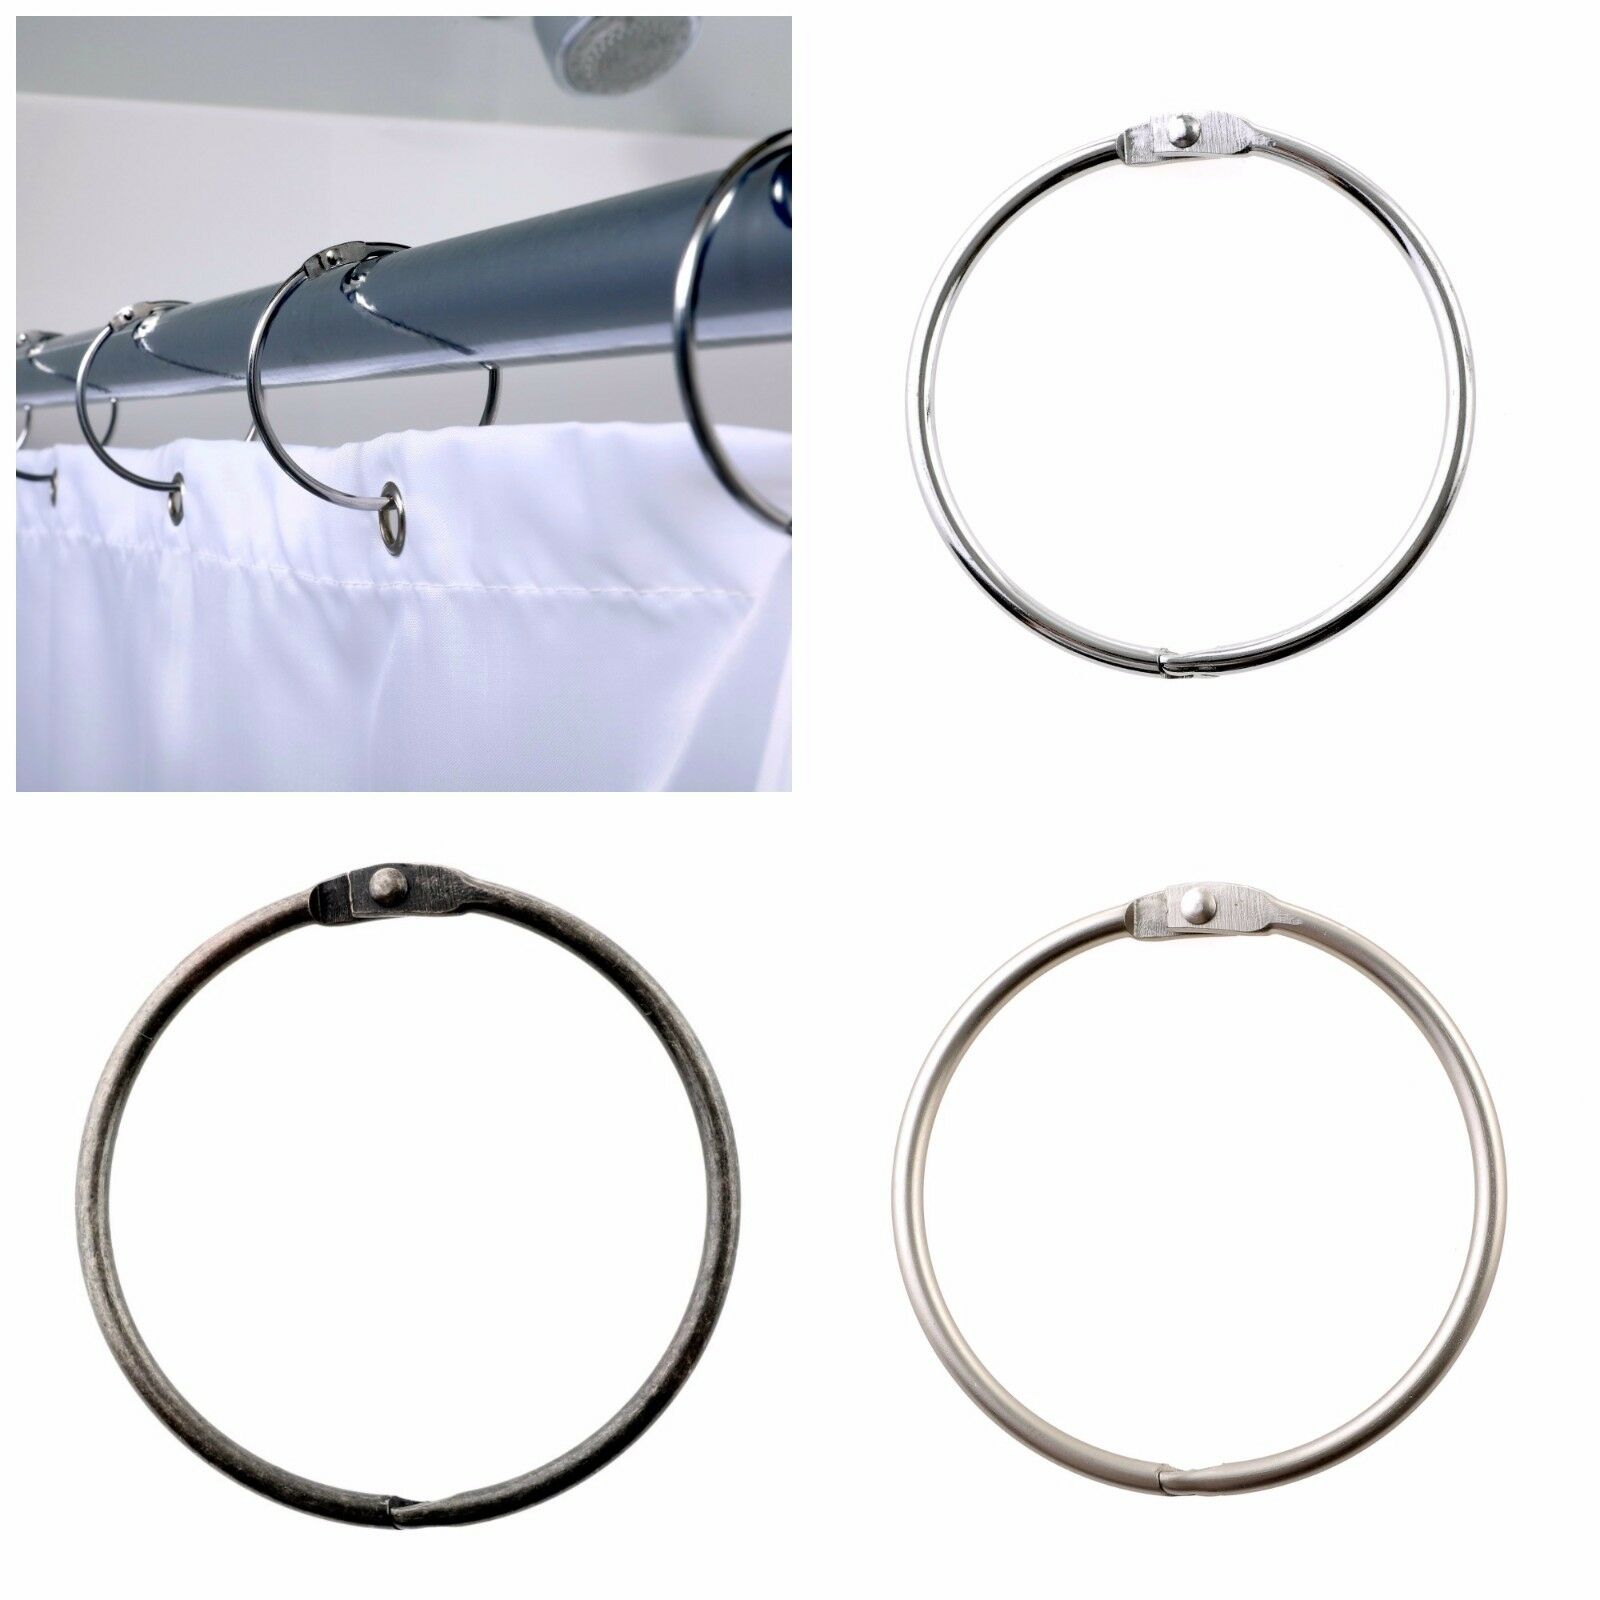 Round Shower Curtain Rings: Brushed Nickel, Bronze & Chrome Shower Rings